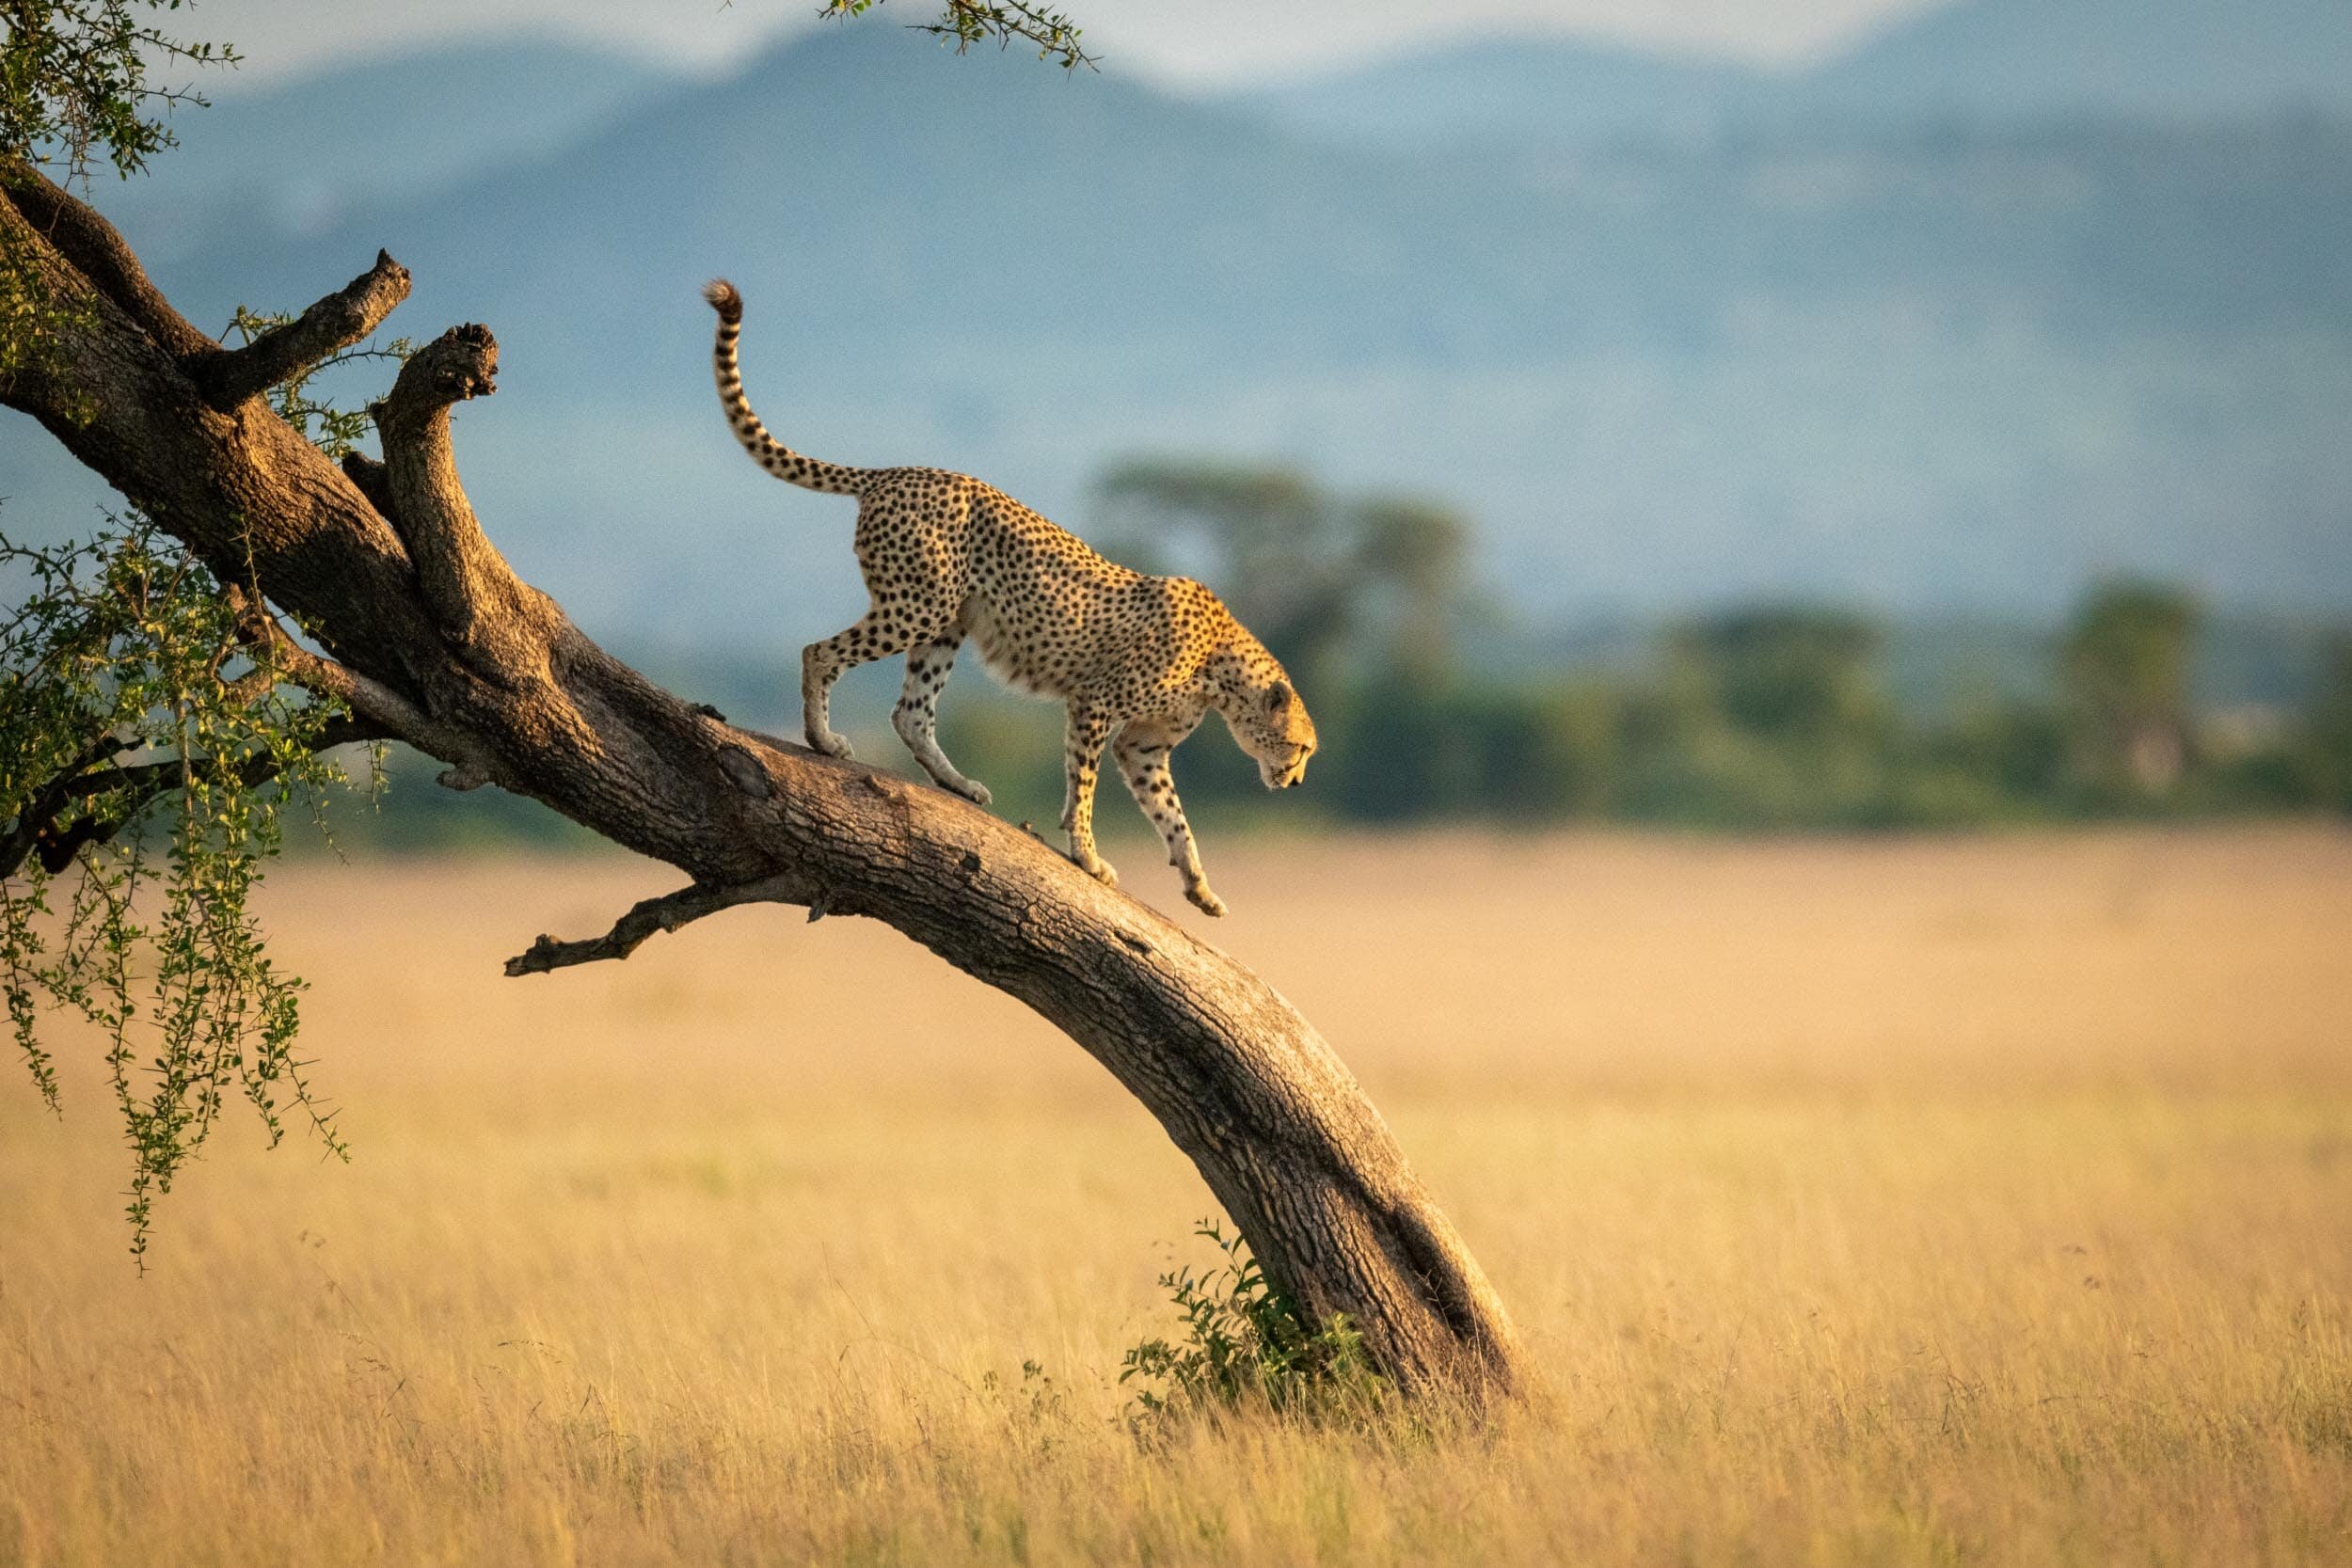 Cheetah walks down twisted tree in savannah: 153 downloads